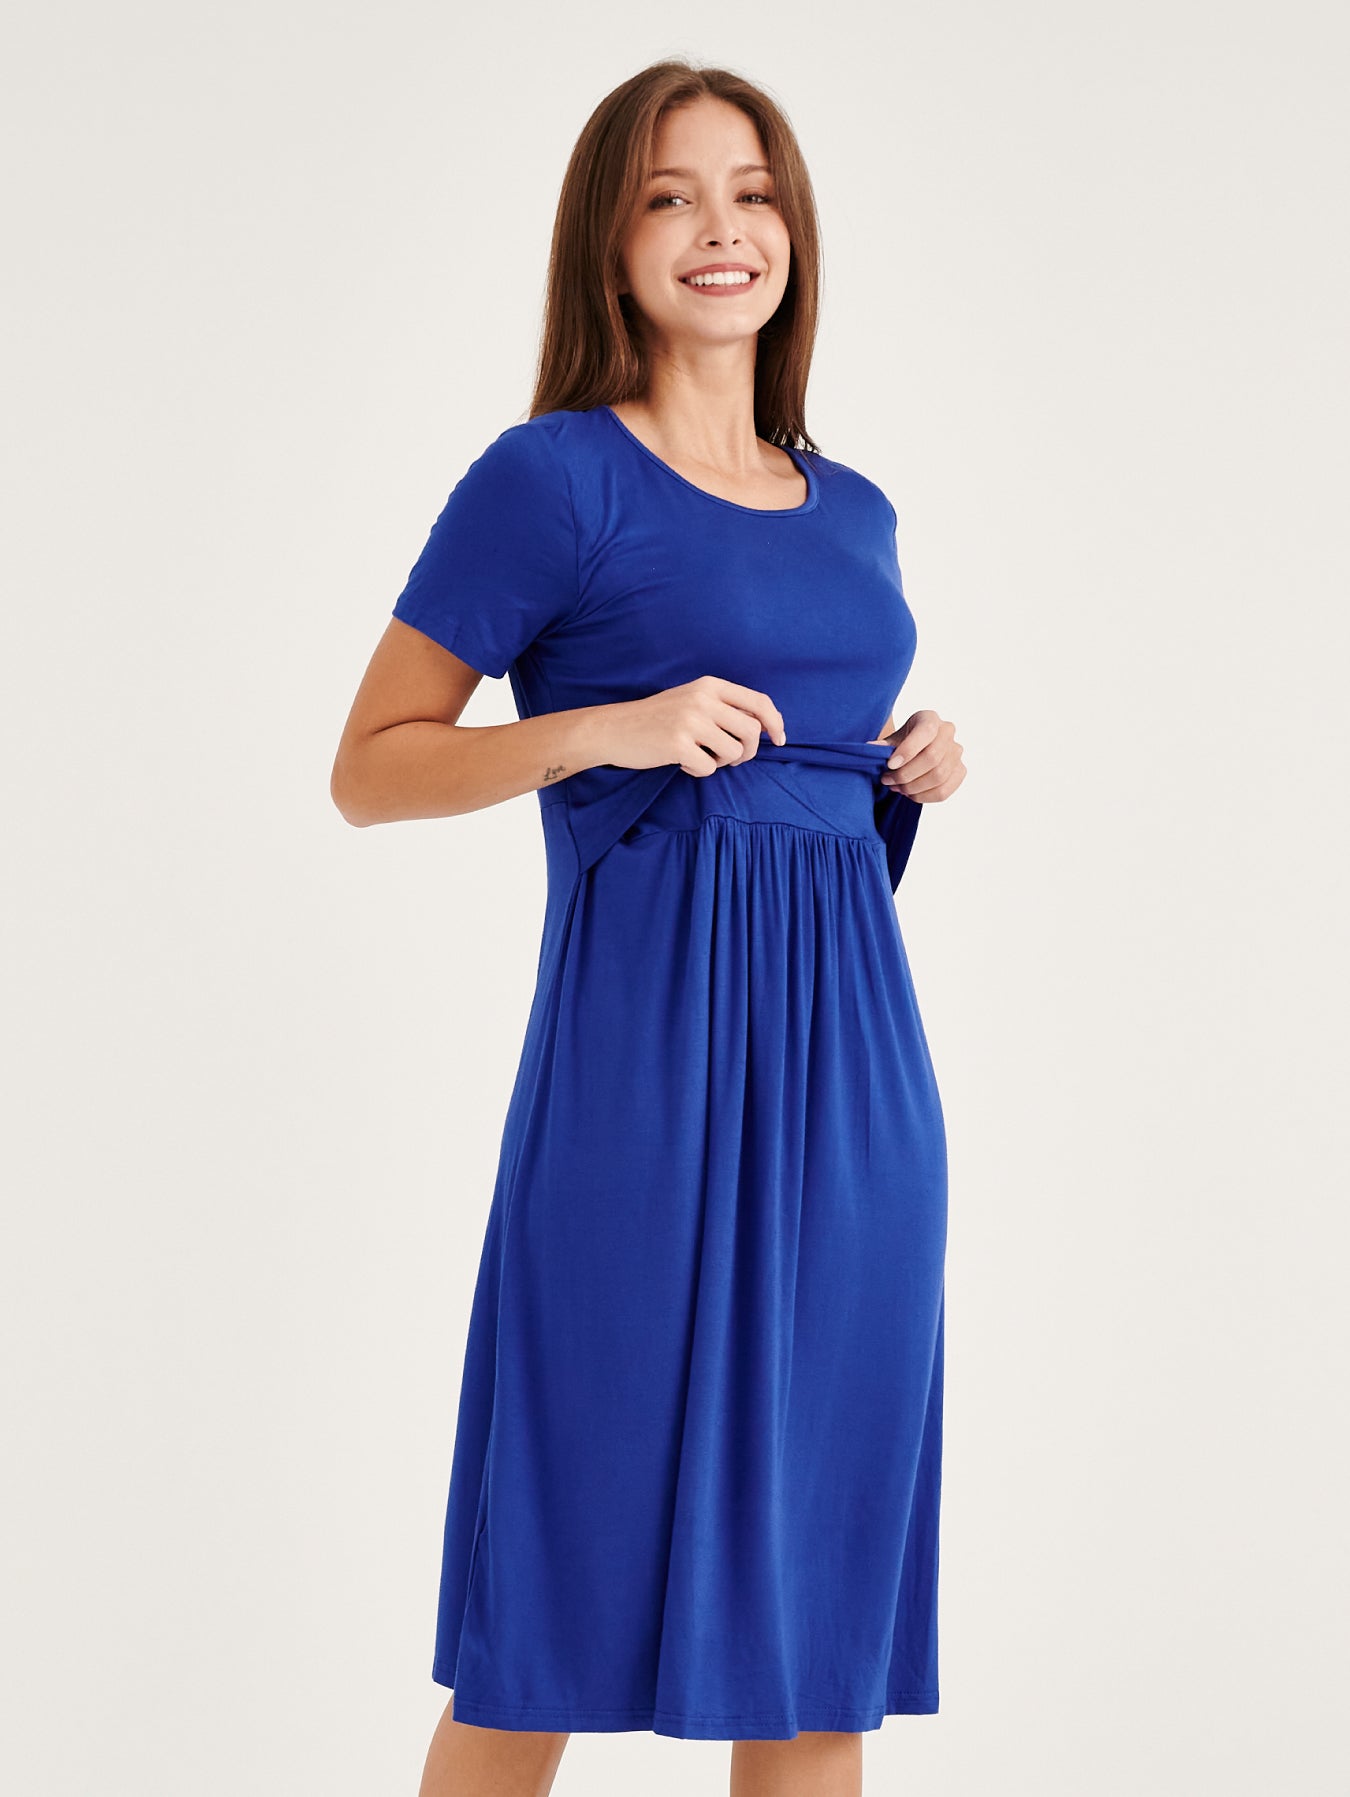 Stylish and comfortable Azure Classic Lift-Up Maternity Nursing Dress